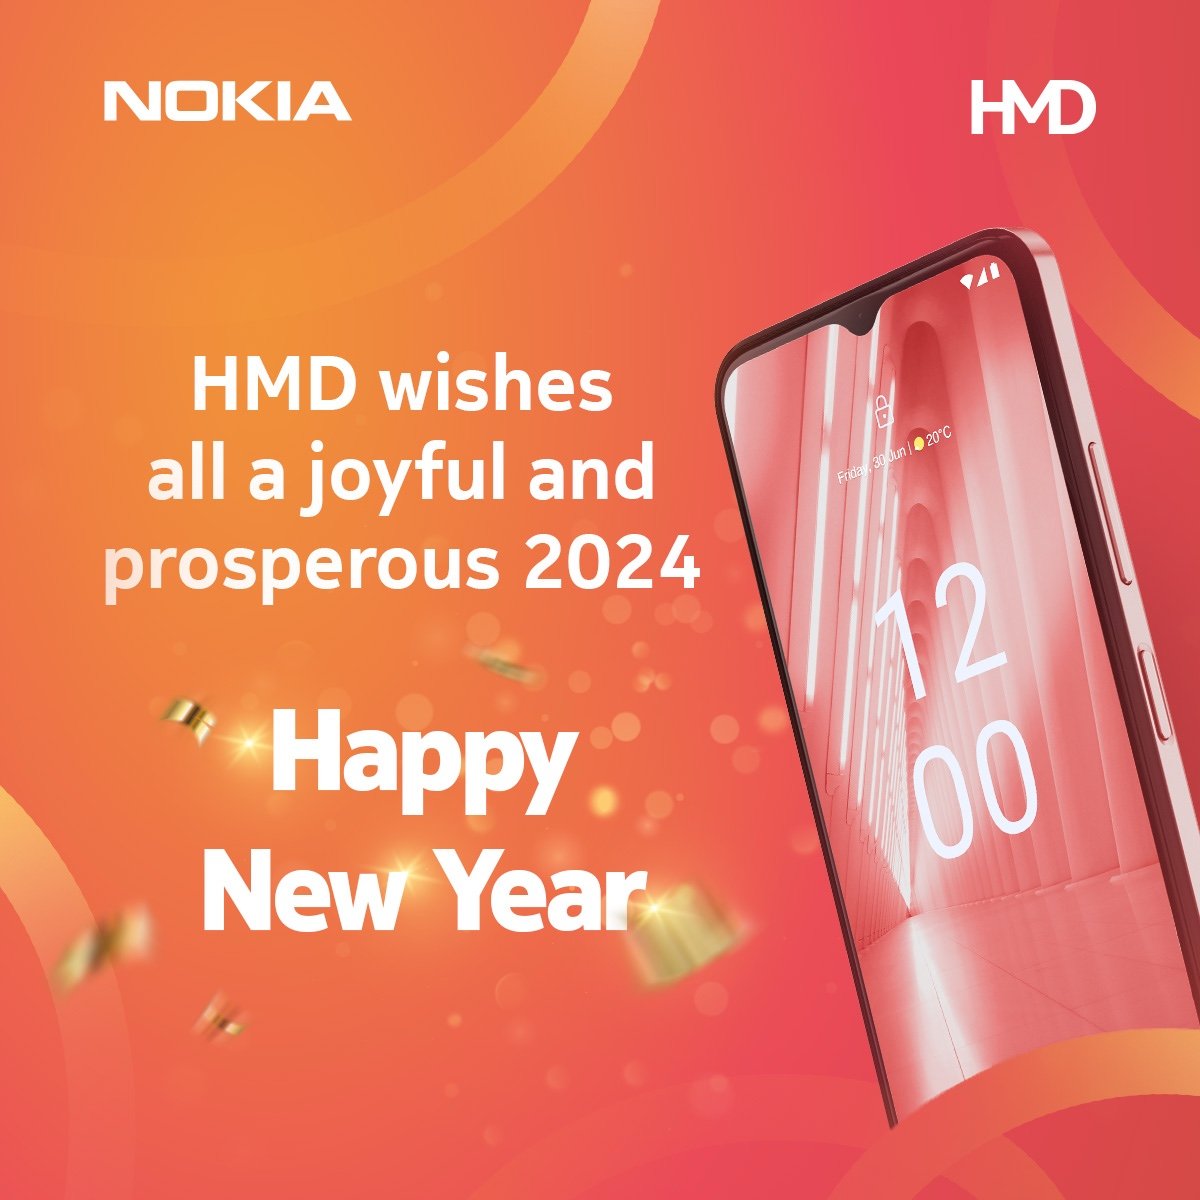 Swiping into a brand new year! Wishing a great 2024 ahead.

#Hello2024 #NewYearVibes #HMD #NokiaSmartphones